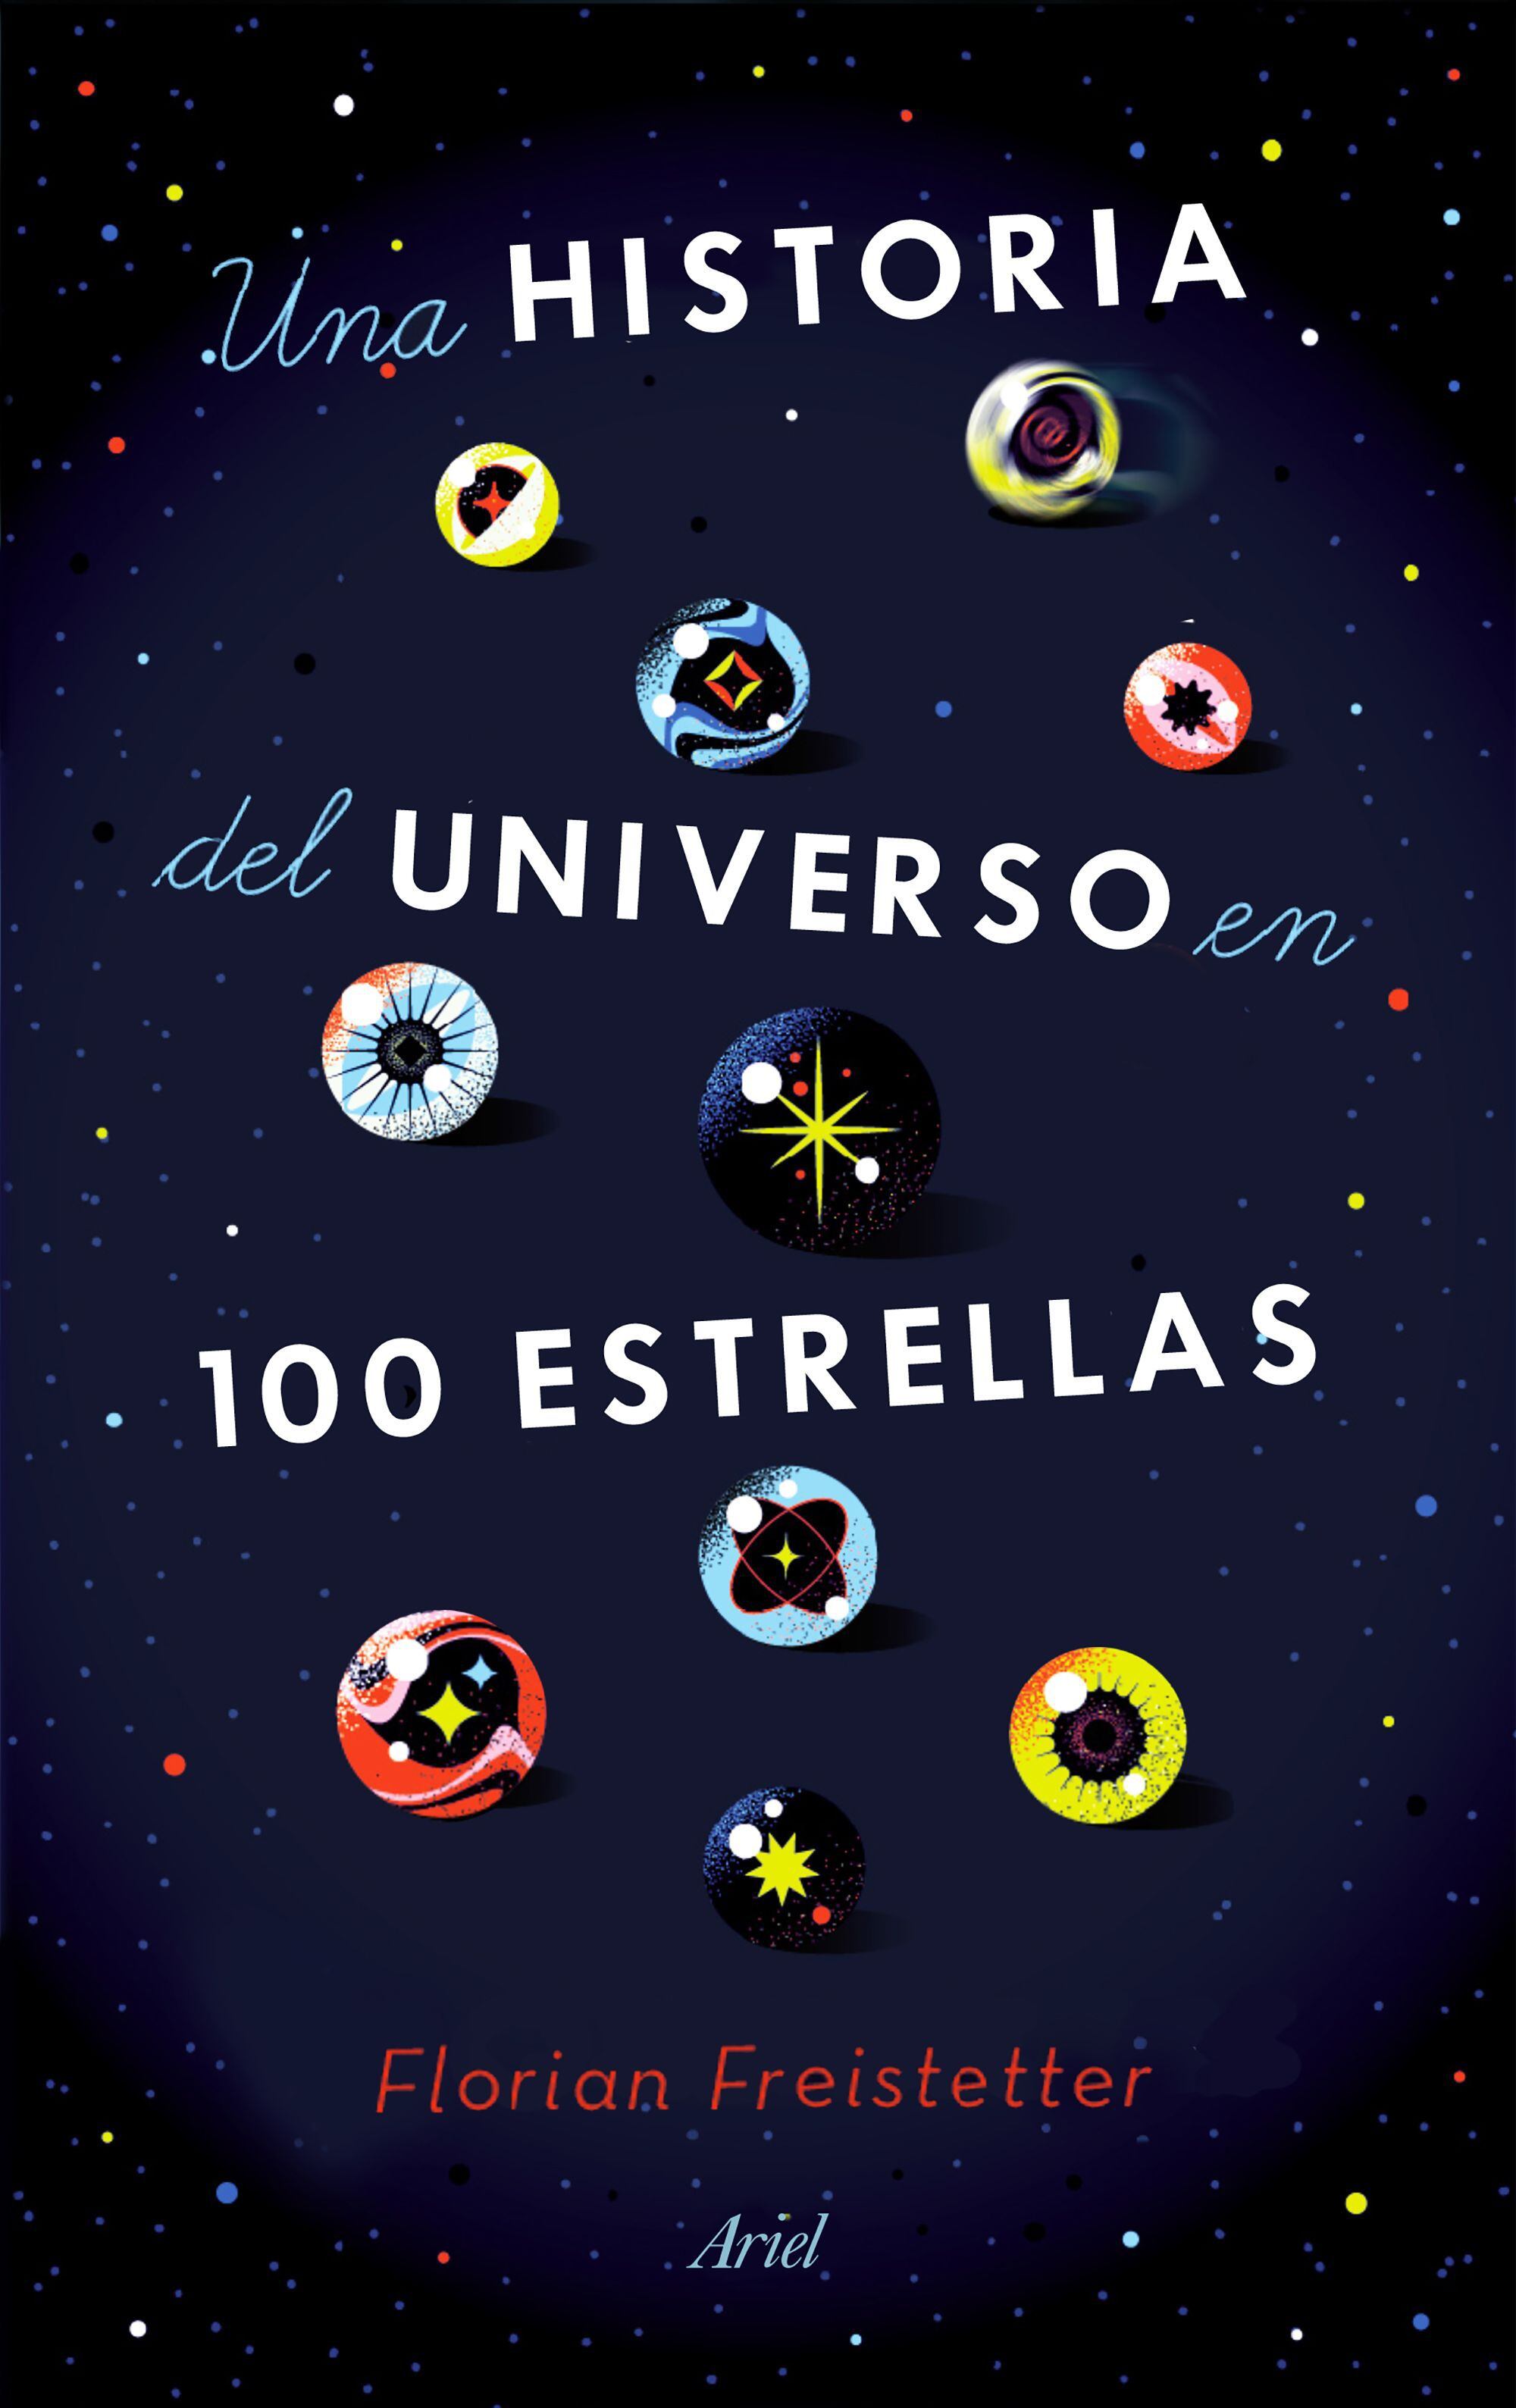 Portada del libro ‘Una historia del universo en 100 estrellas’, de Florian Freistetter.